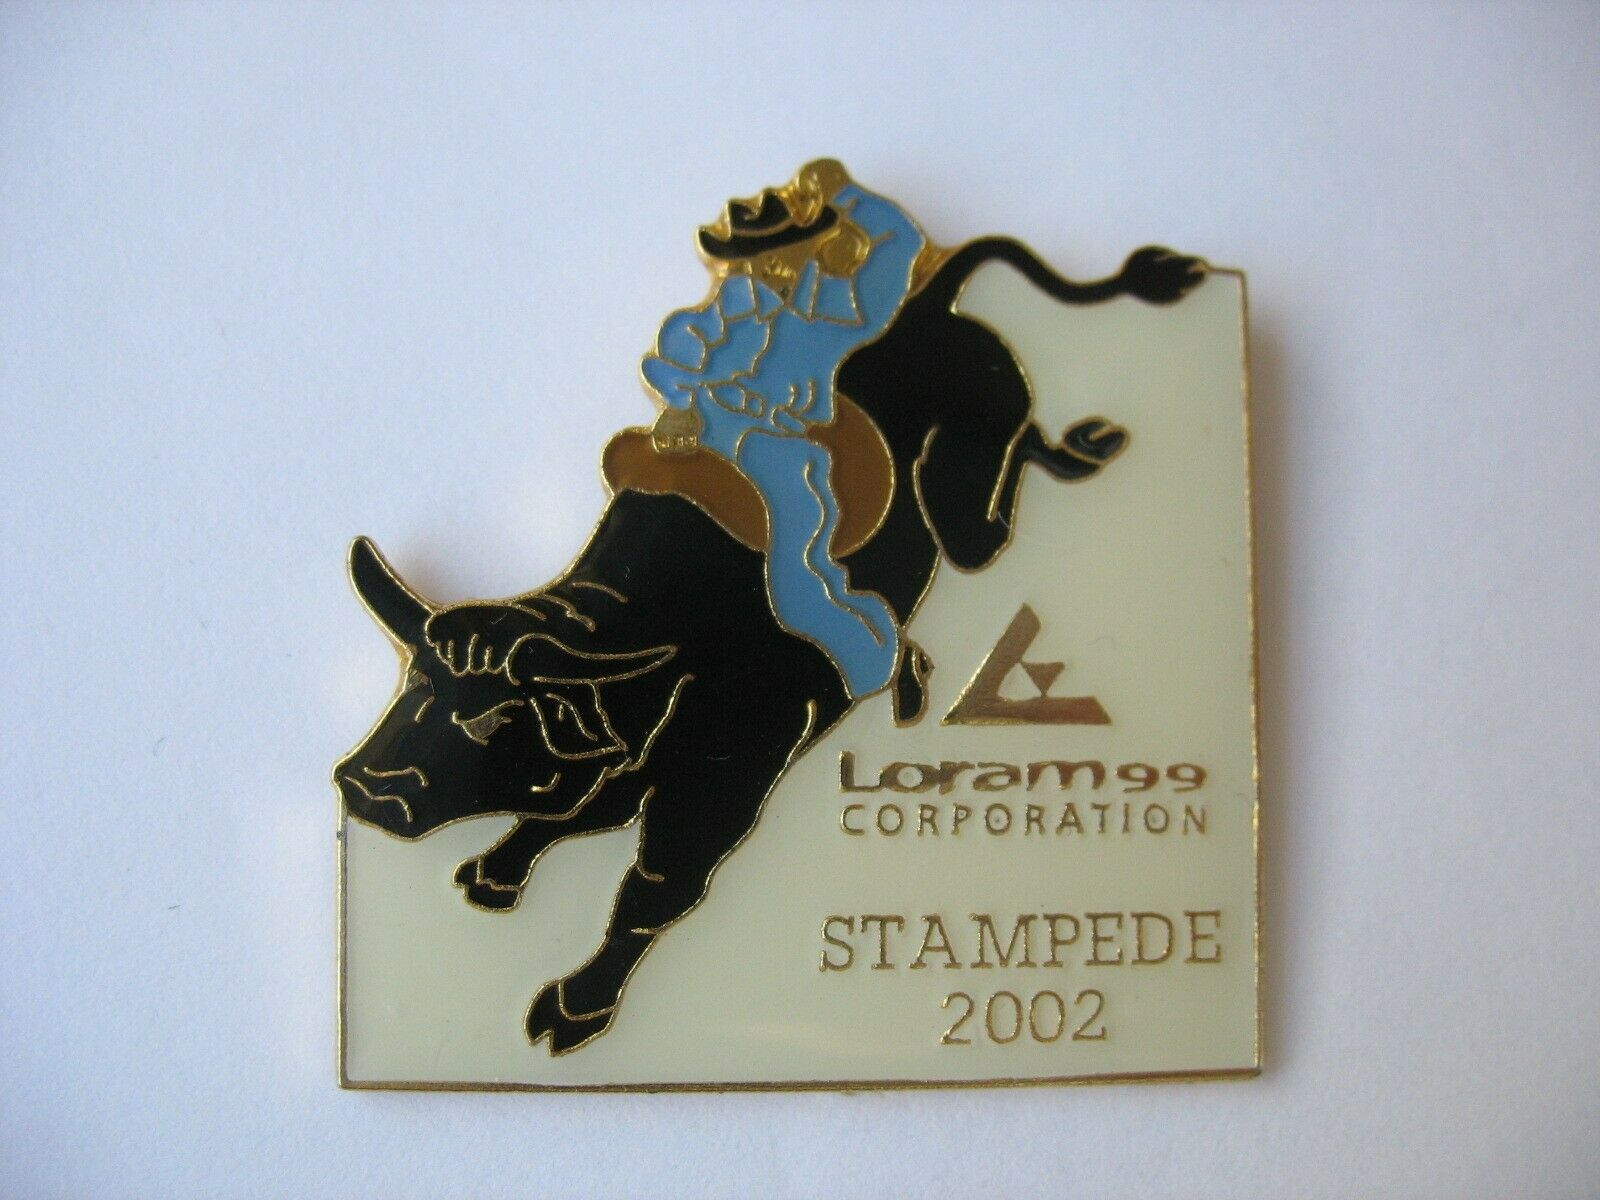 2002 Loram 99 Corporation Stampede Lapel Pin